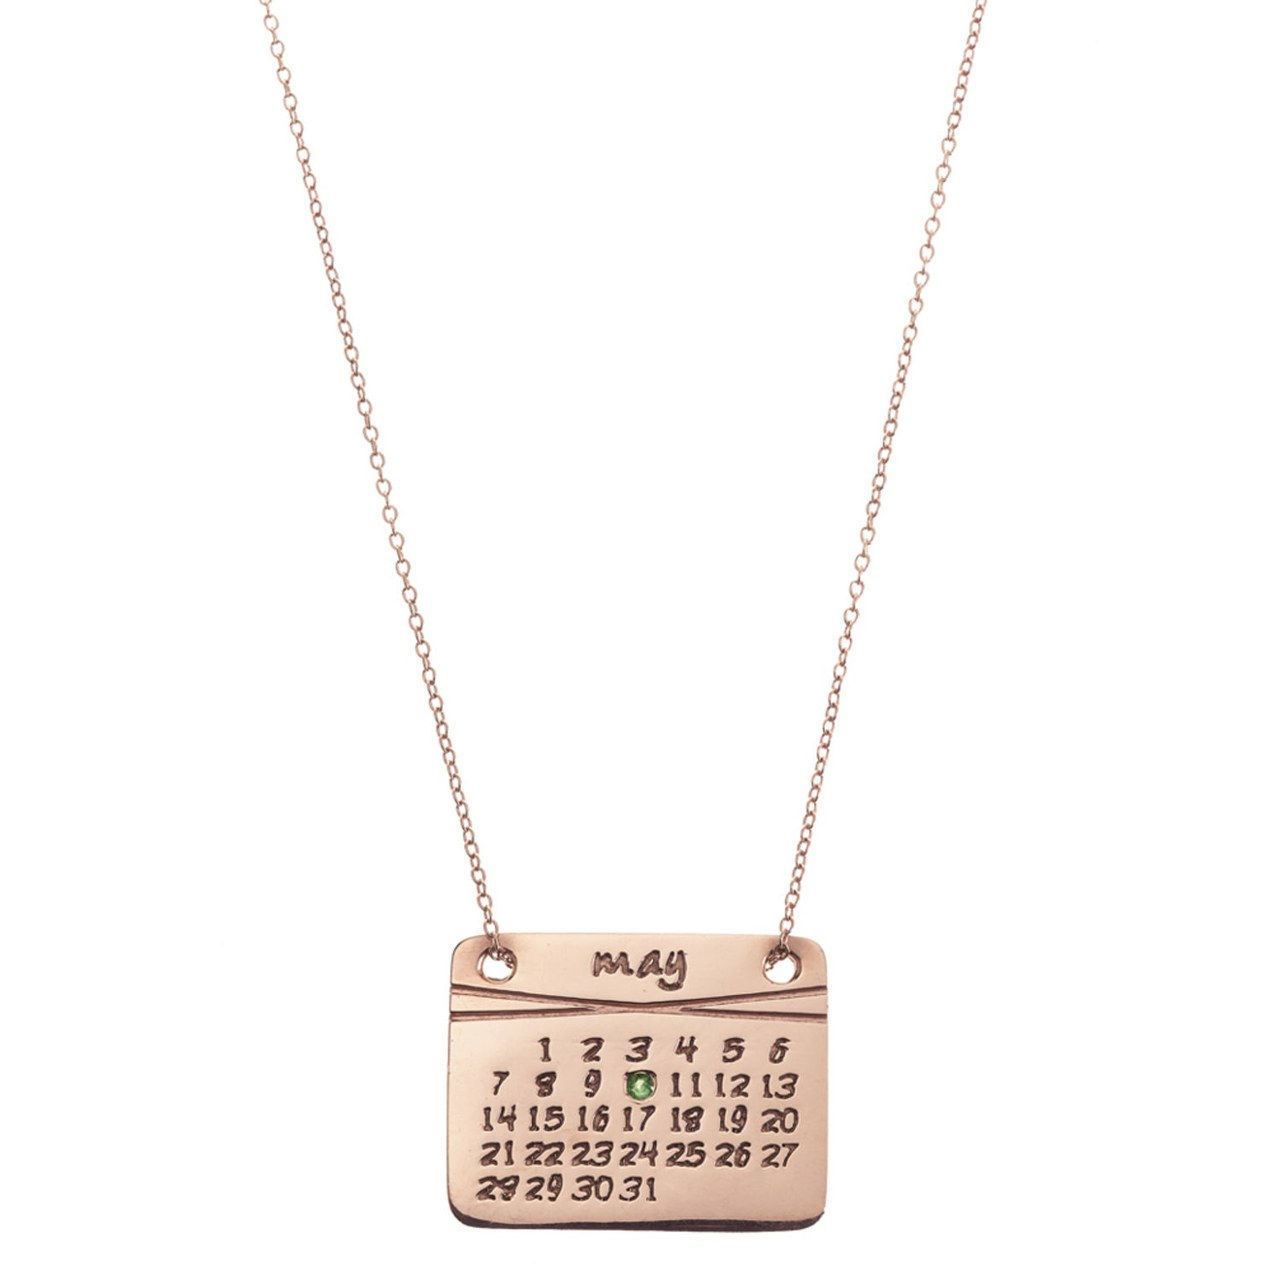 1 wedding date necklaces caldendar roman numerals stamped 0409 courtesy